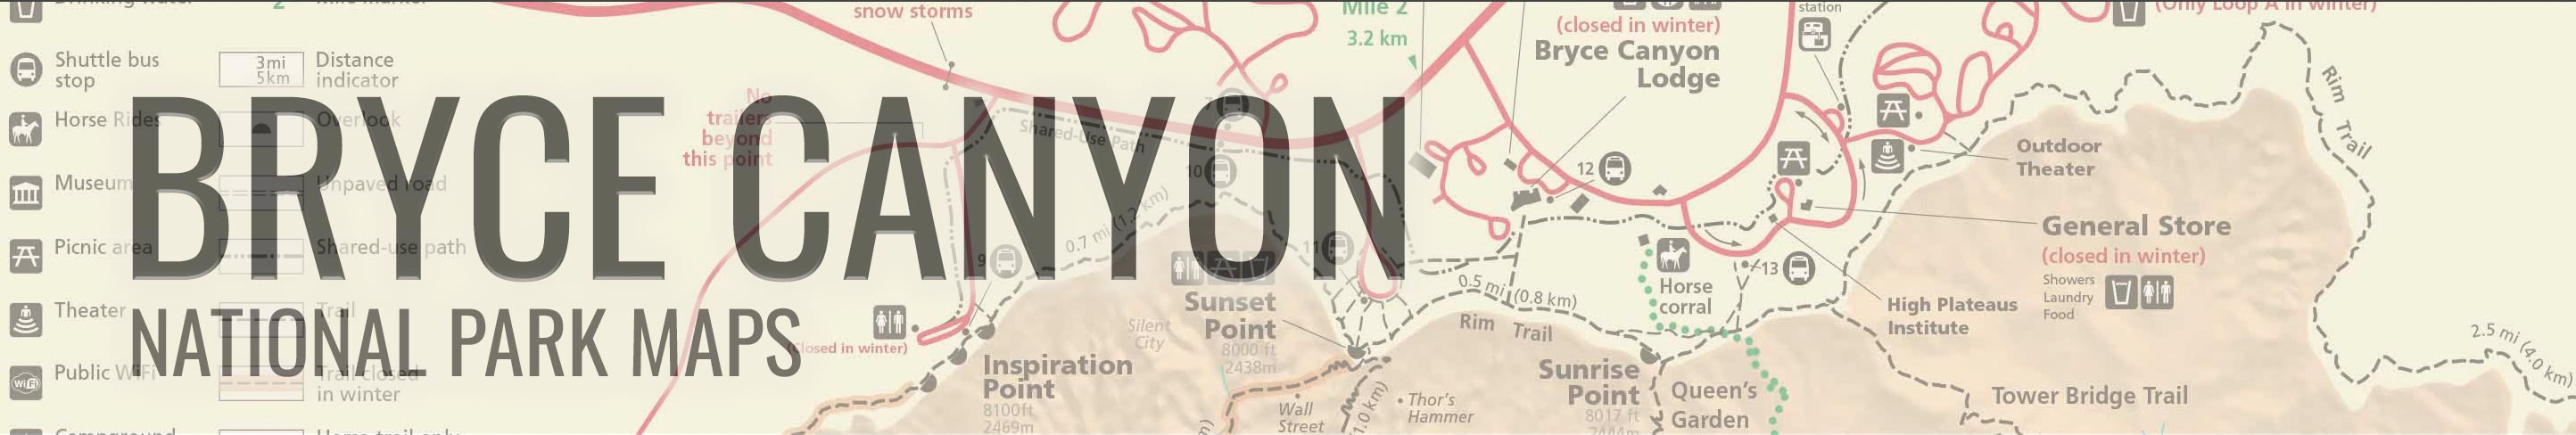 bryce-canyon-national-park-maps-header